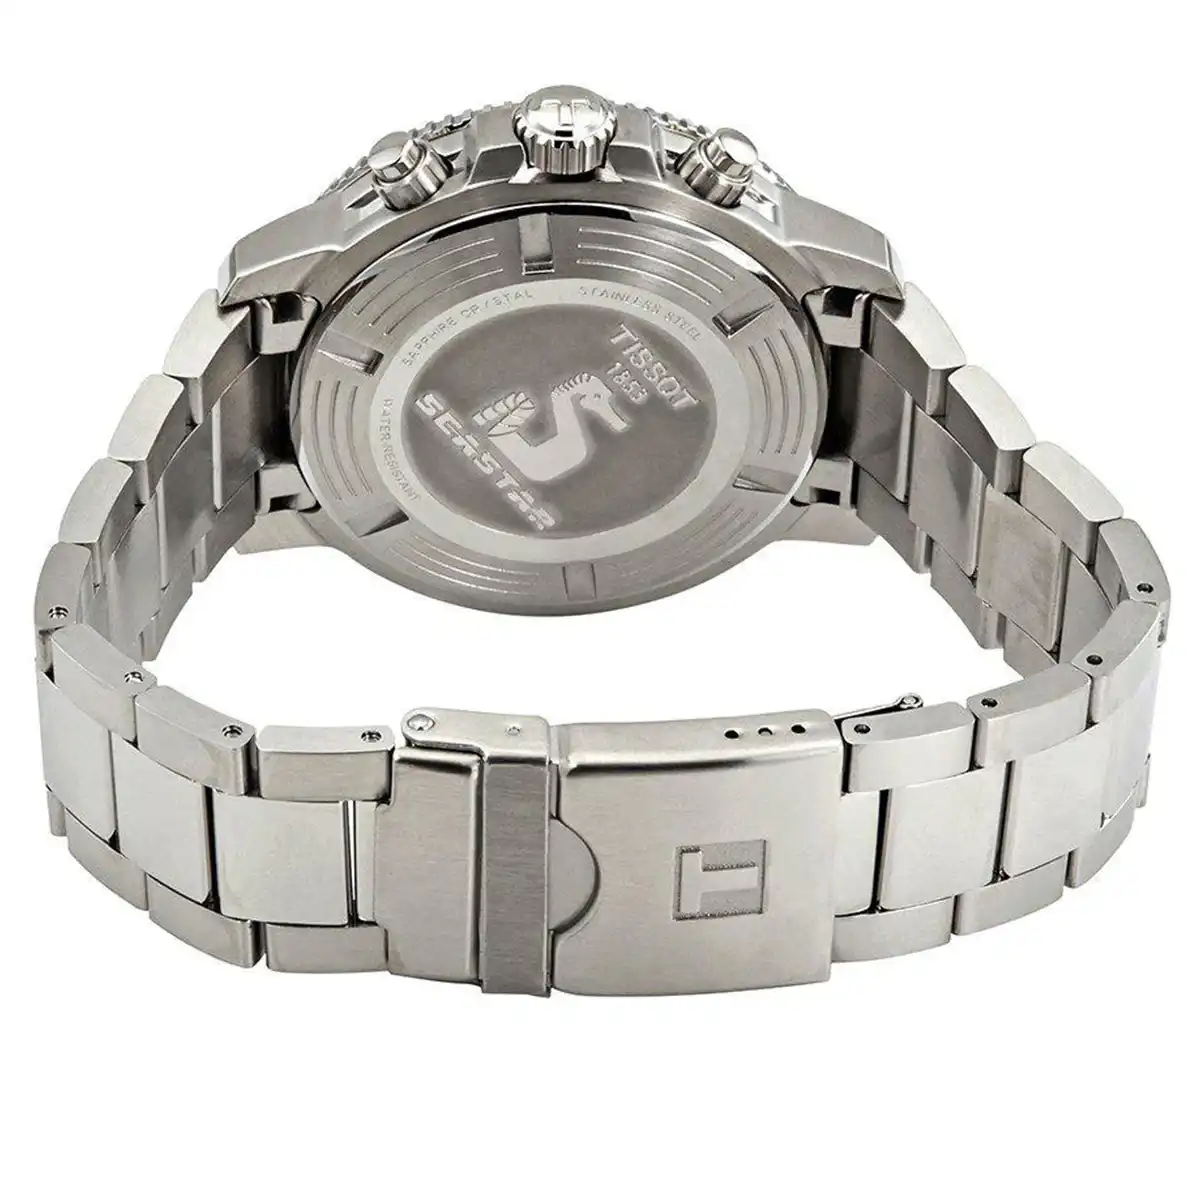 Tissot Swiss Men's Round Shape stainless steel Strap Analog Wrist Watch, Silver, T120-417-11-051